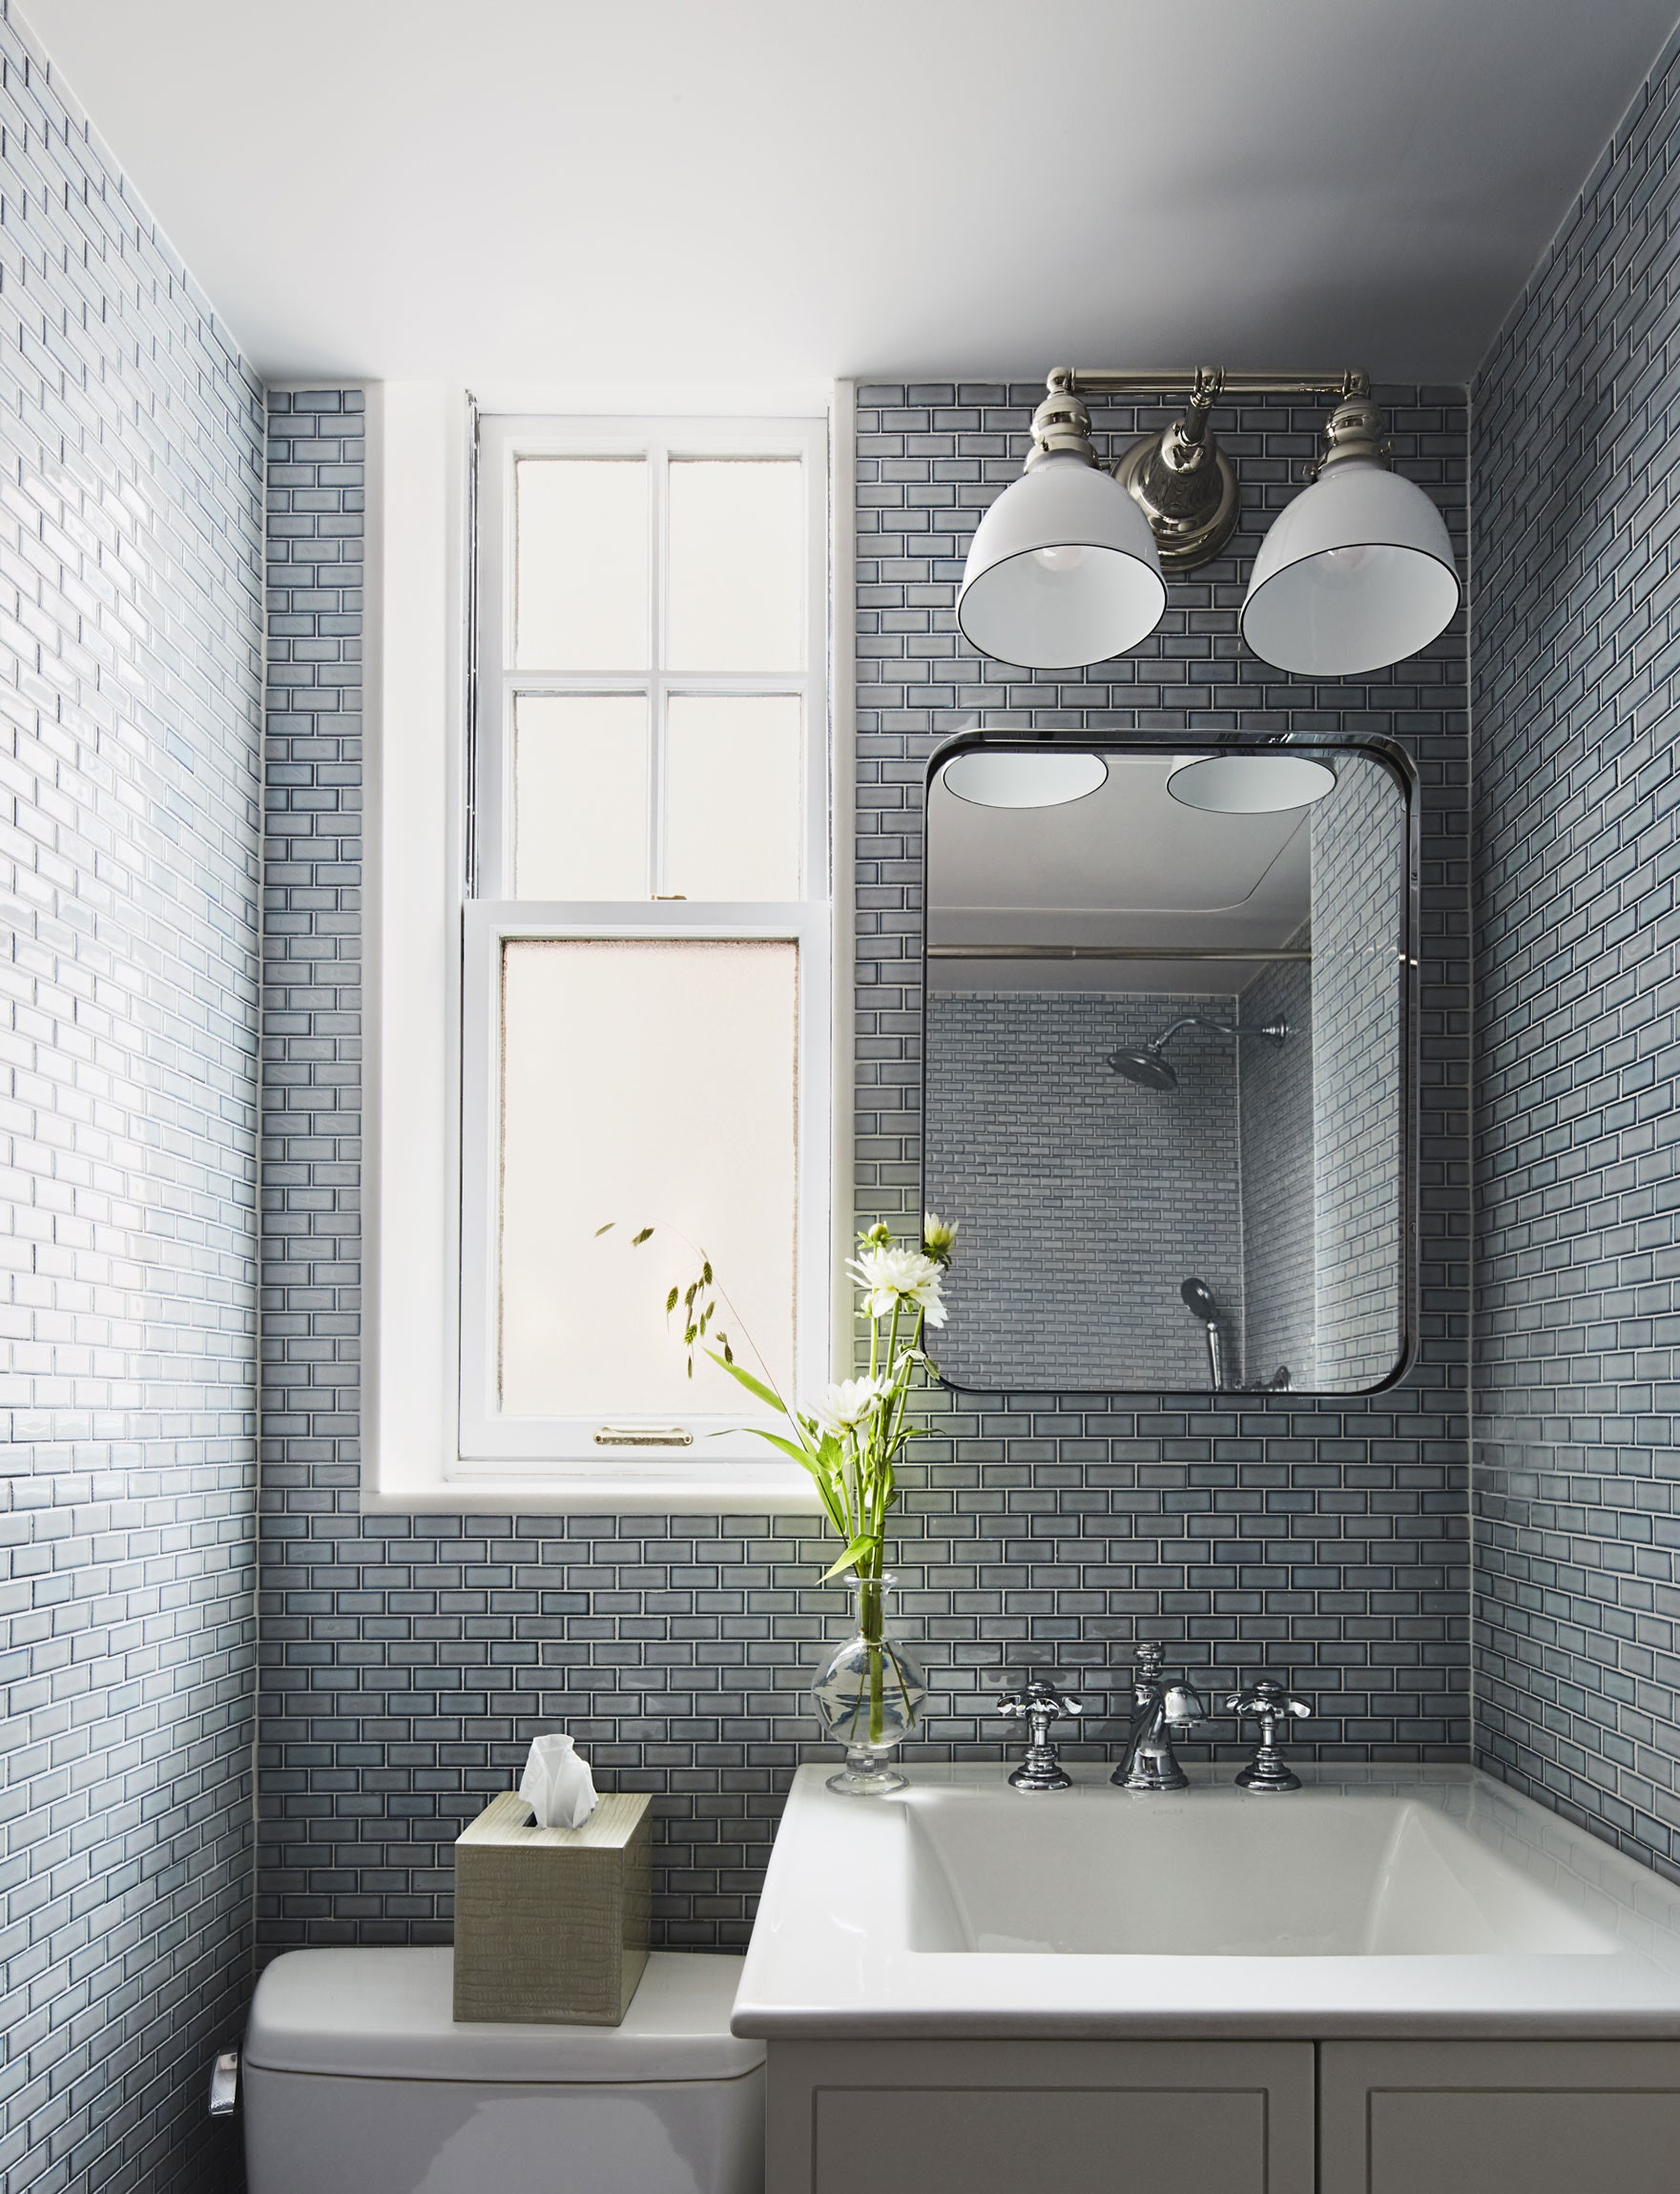 Tile Designs For Bathroom
 This Bathroom Tile Design Idea Changes Everything